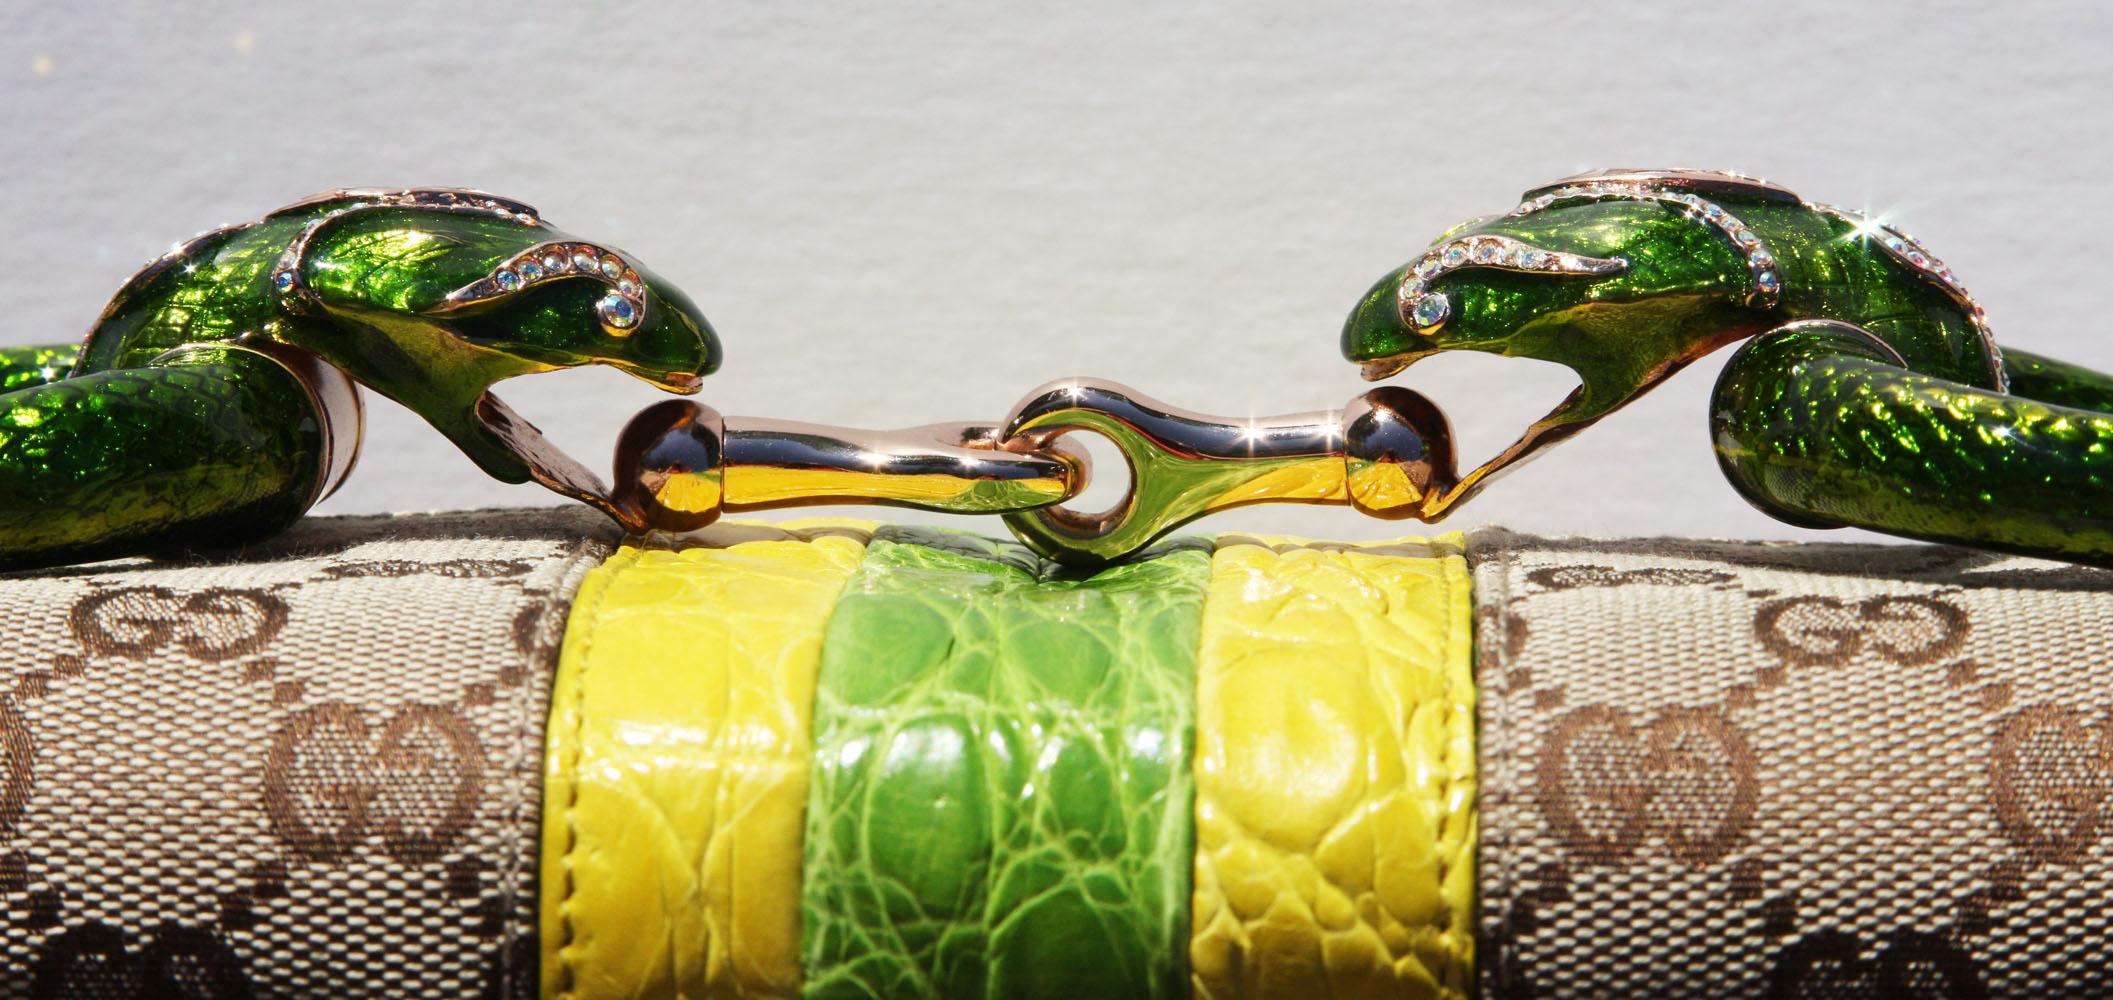  Tom Ford for GUCCI 2004 Crocodile Trimmed Horsebit Jeweled Serpent Clutch Bag 2